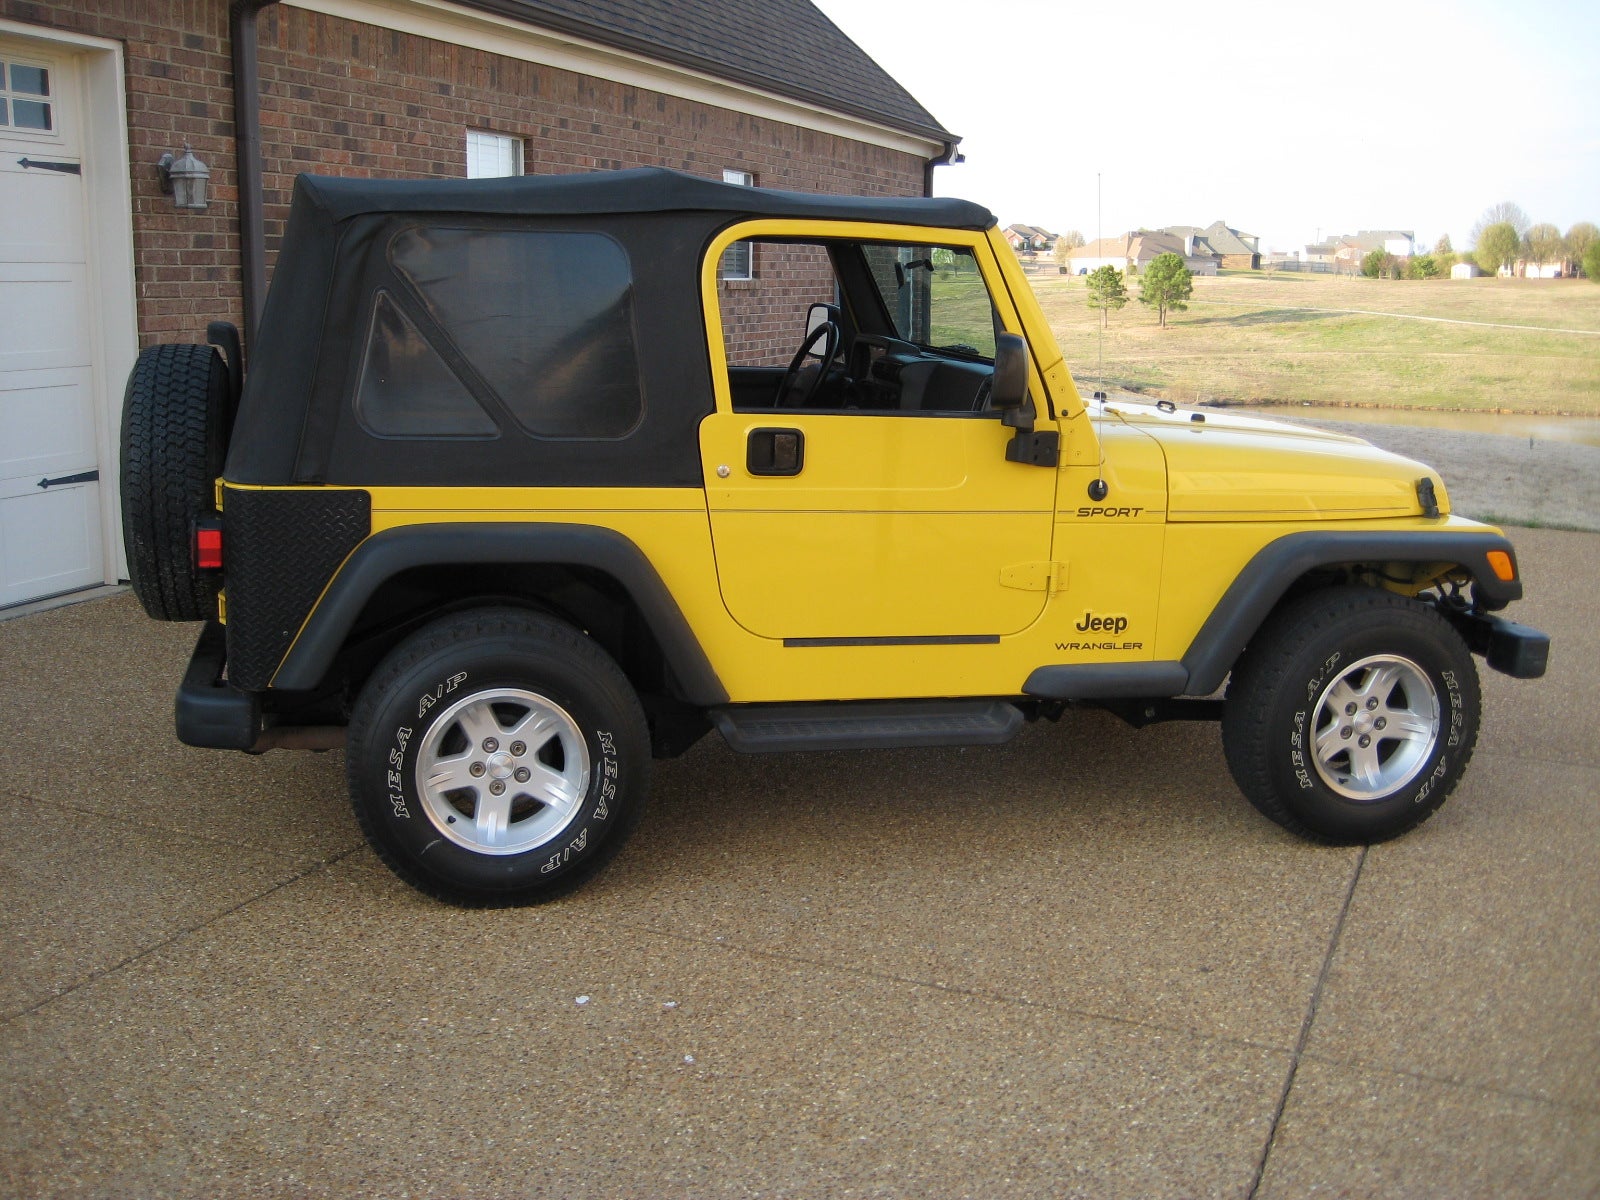 Compare 2004 jeep wrangler models